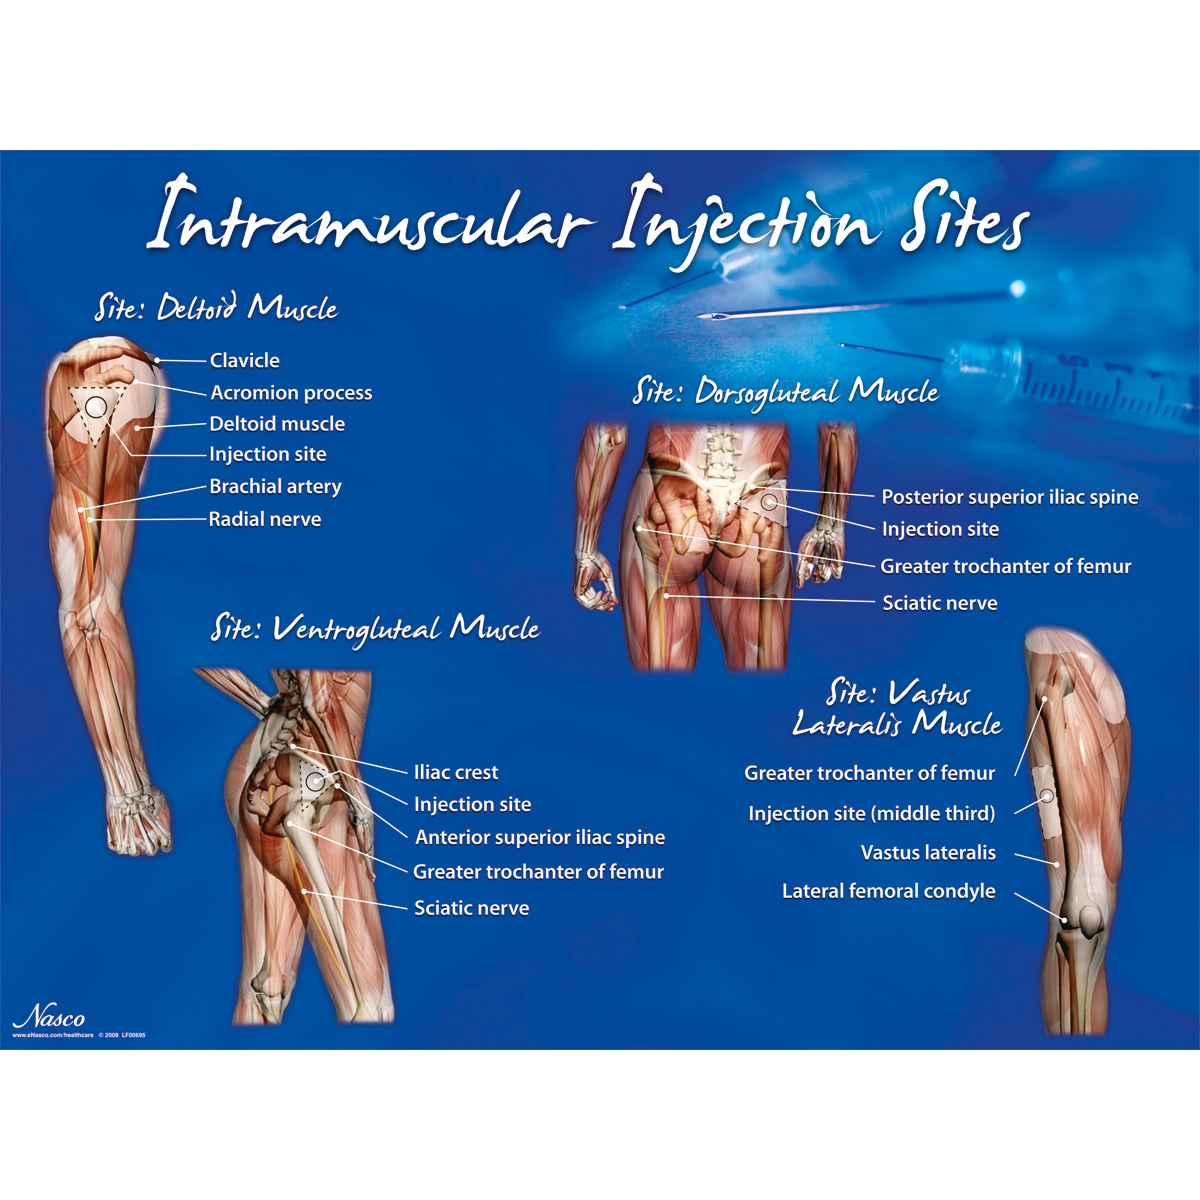 Intravenous Injection Sites